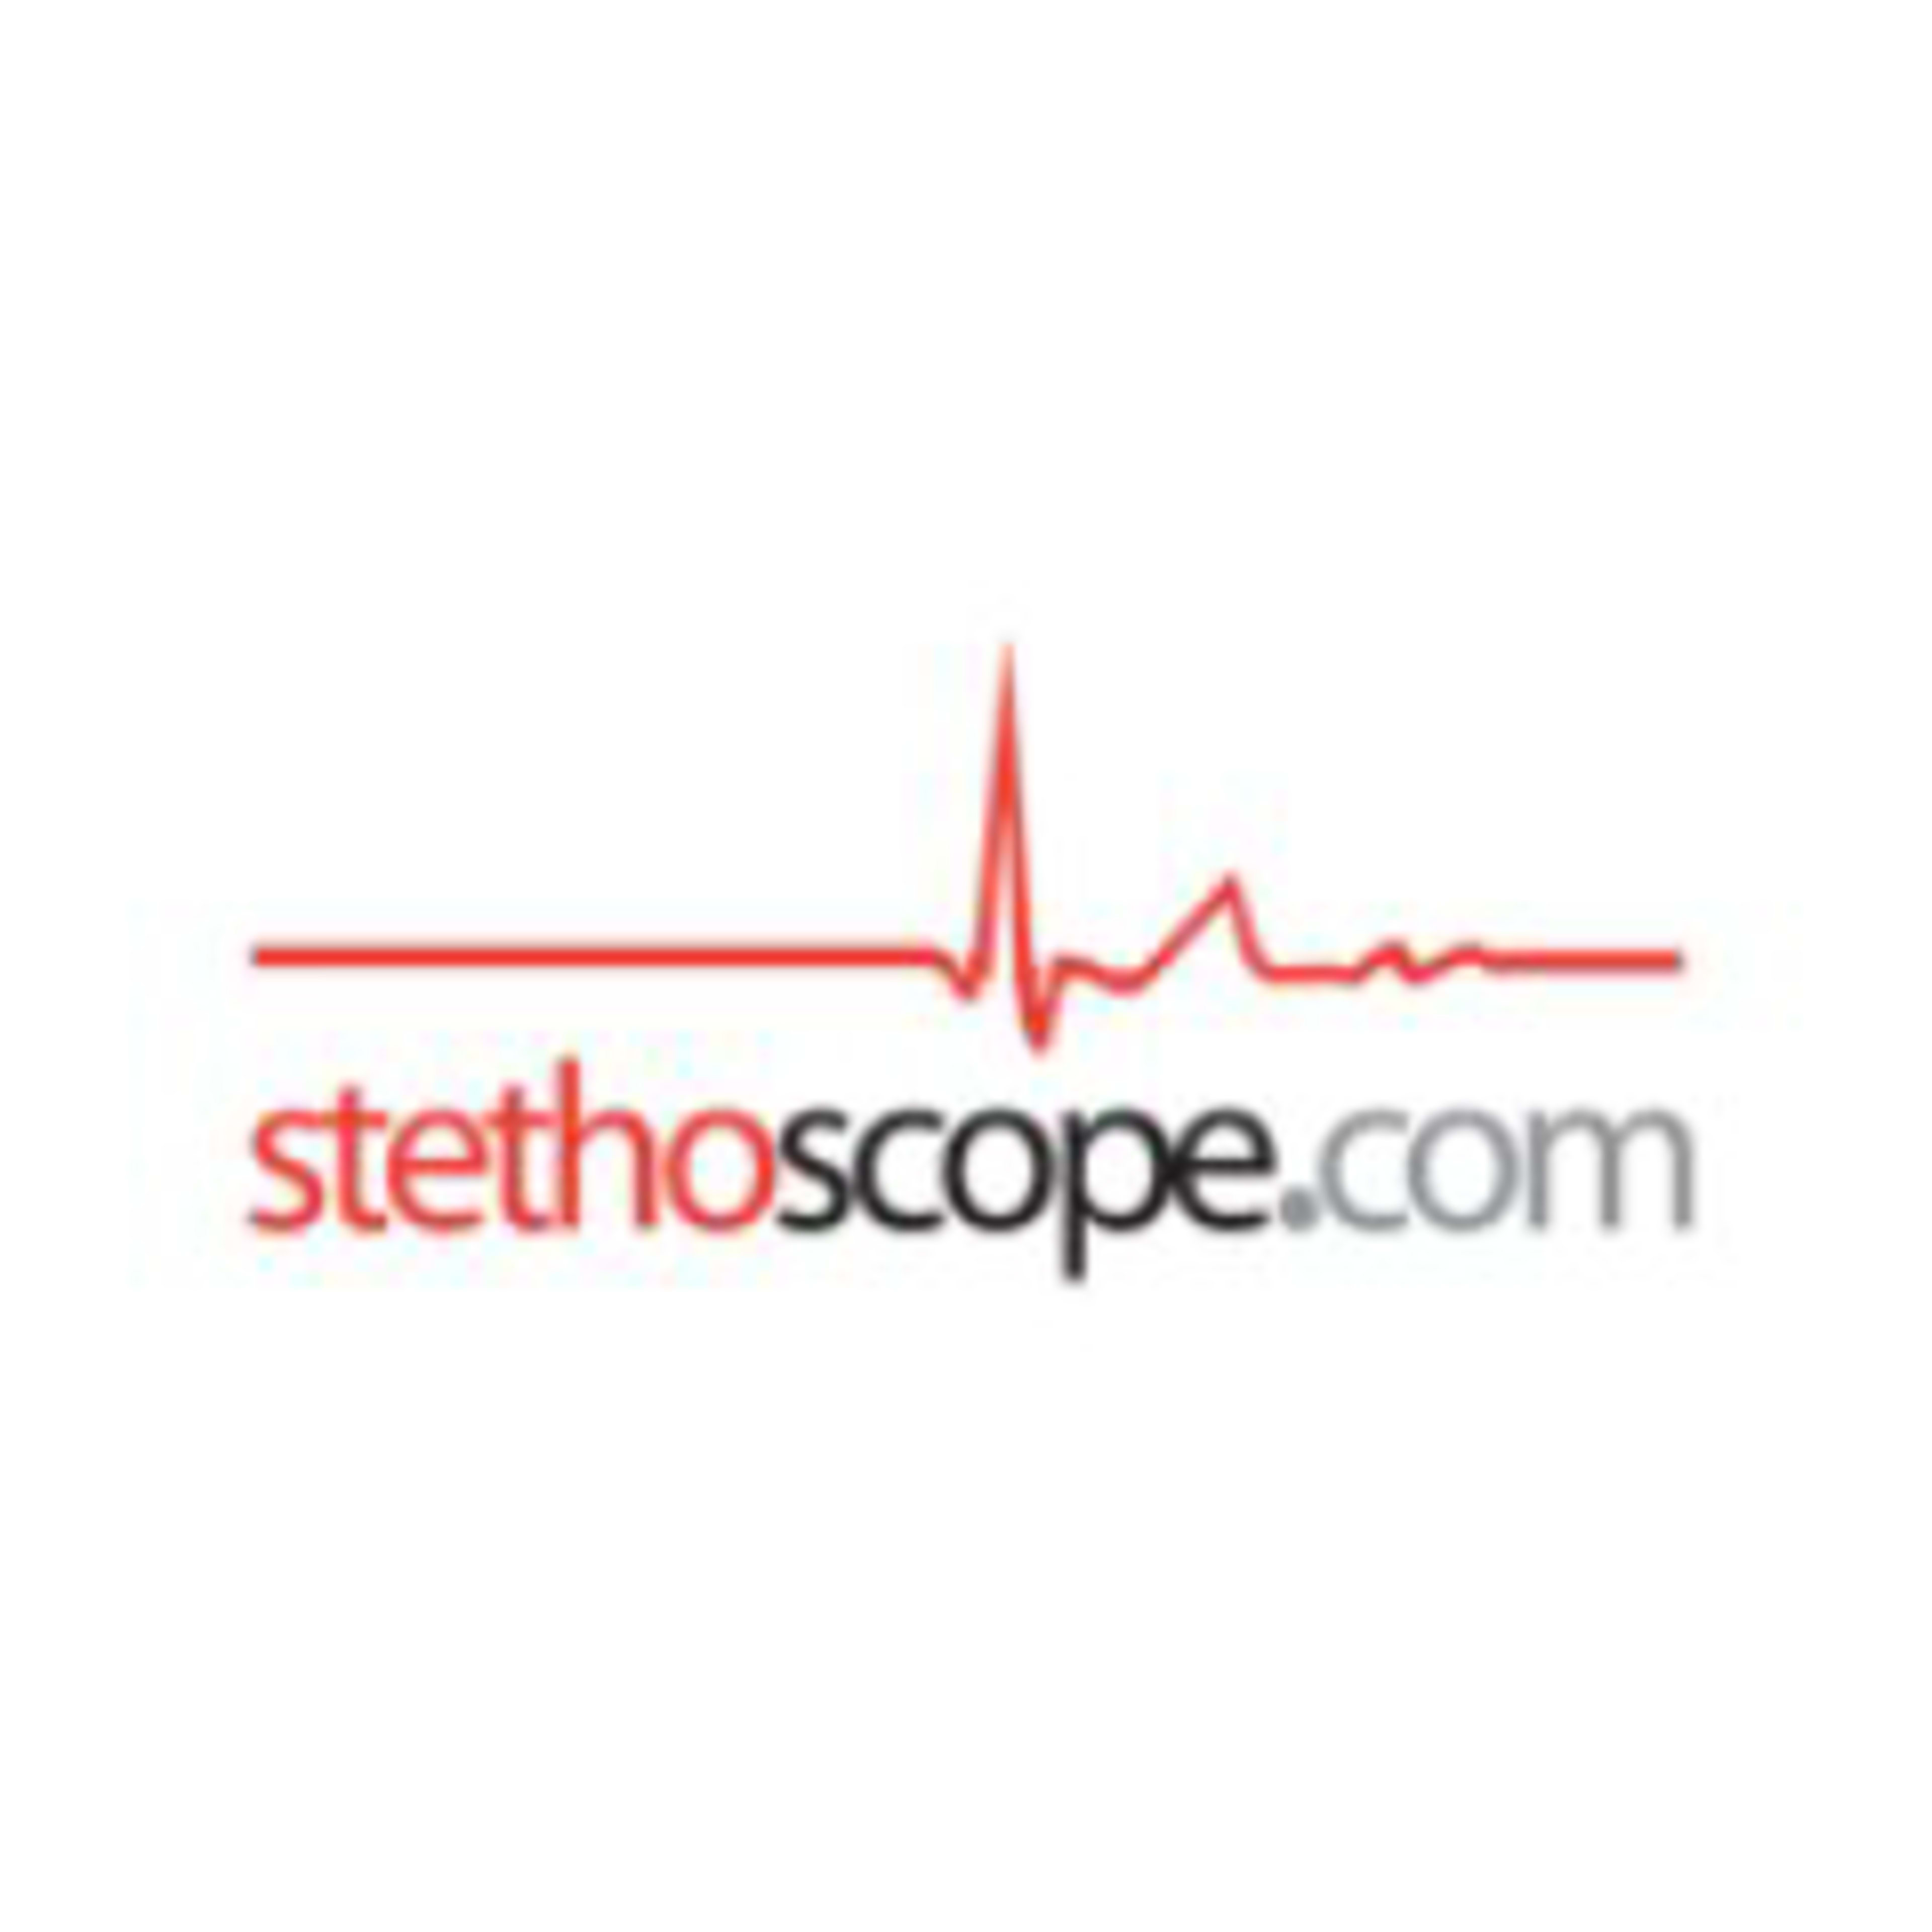 Stethoscope.comCode